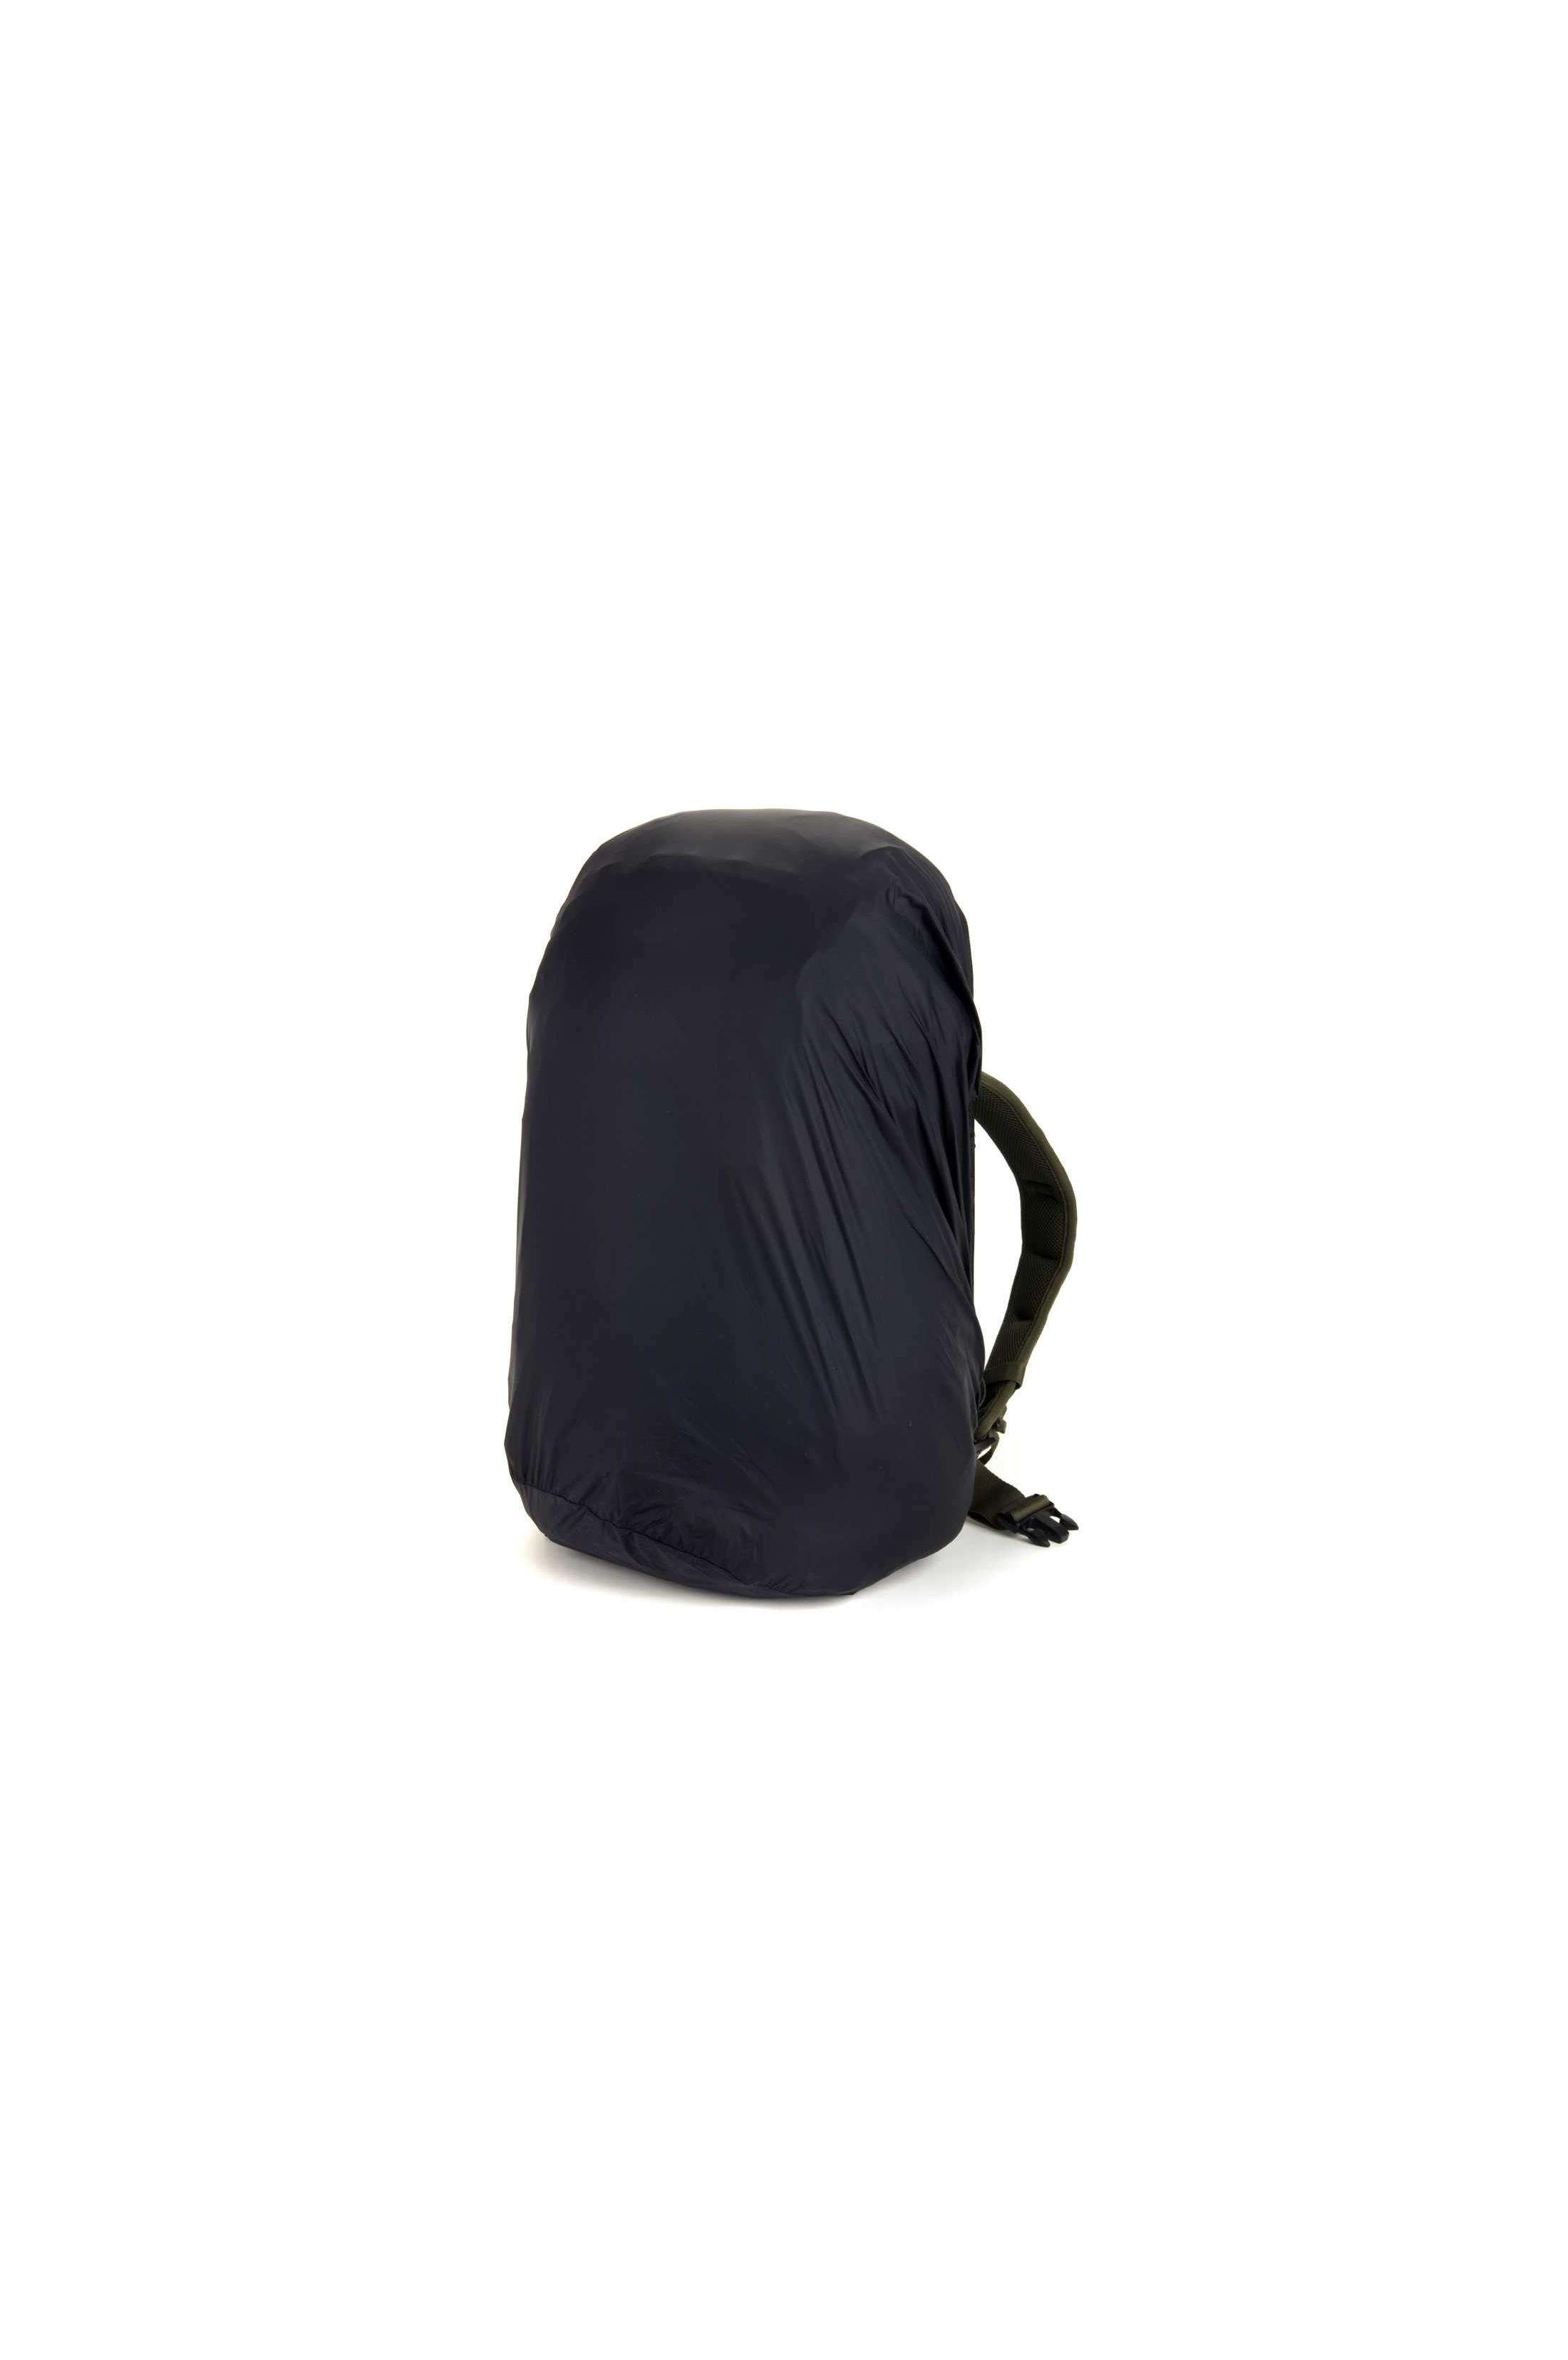 Snugpak Aquacover Waterproof Backpack Rain Cover OutdoorGB